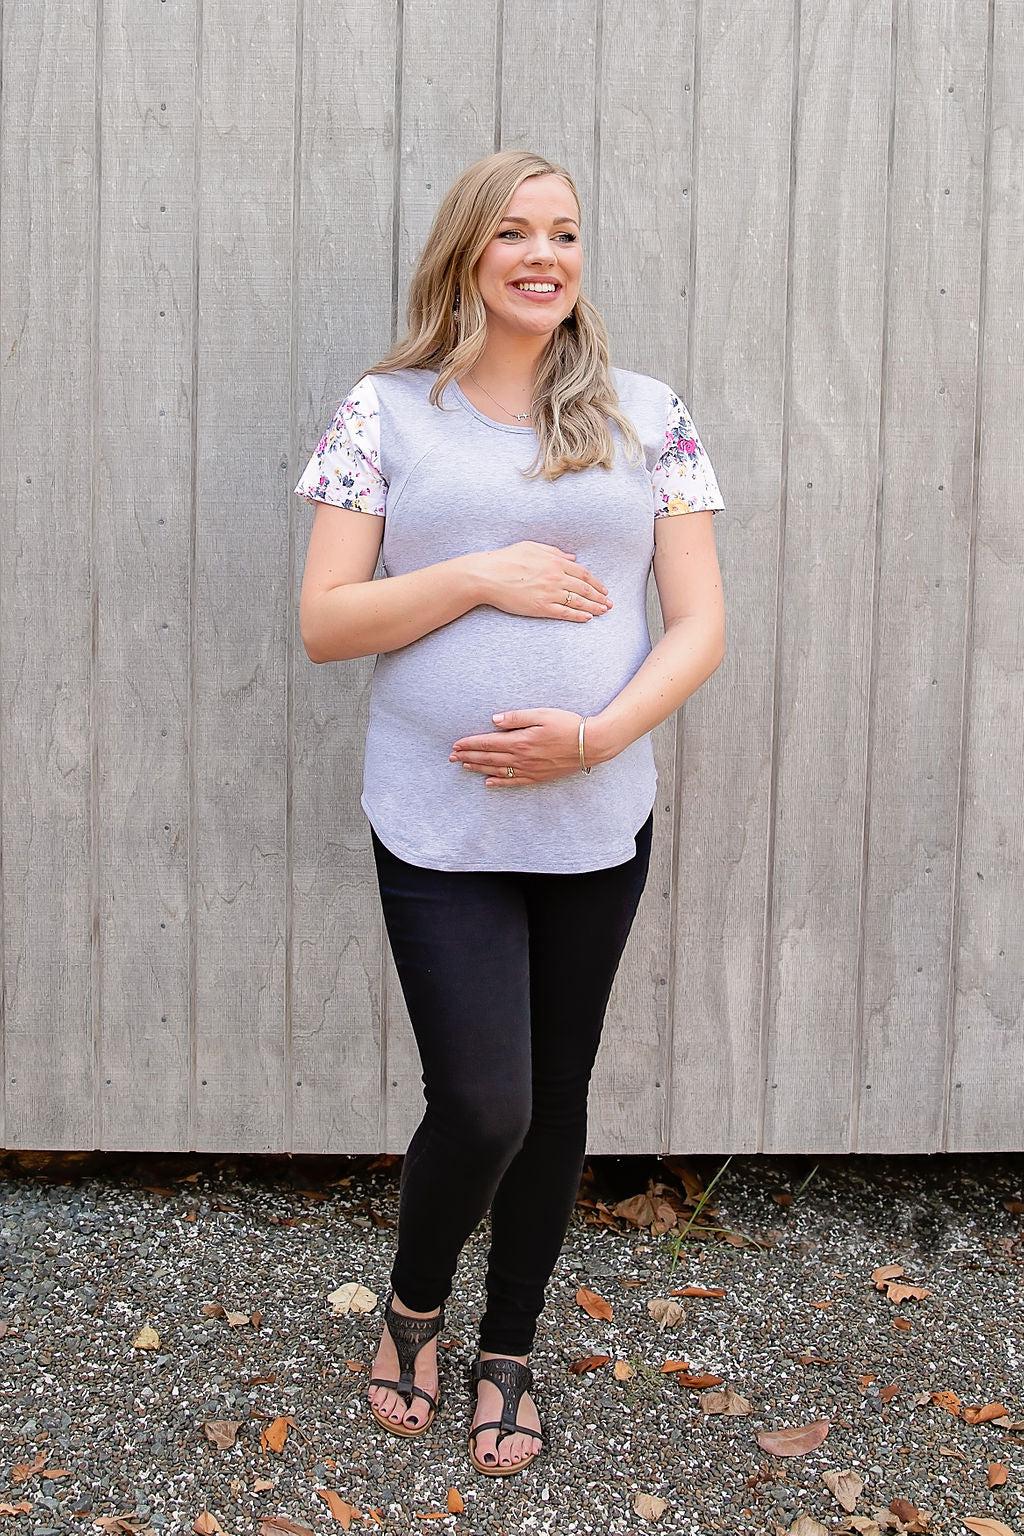 Summer Floral Sleeve Tee in Grey - Zippers-Breastfeeding t-shirt NZ, Maternity t-shirt NZ, Flourish Maternity